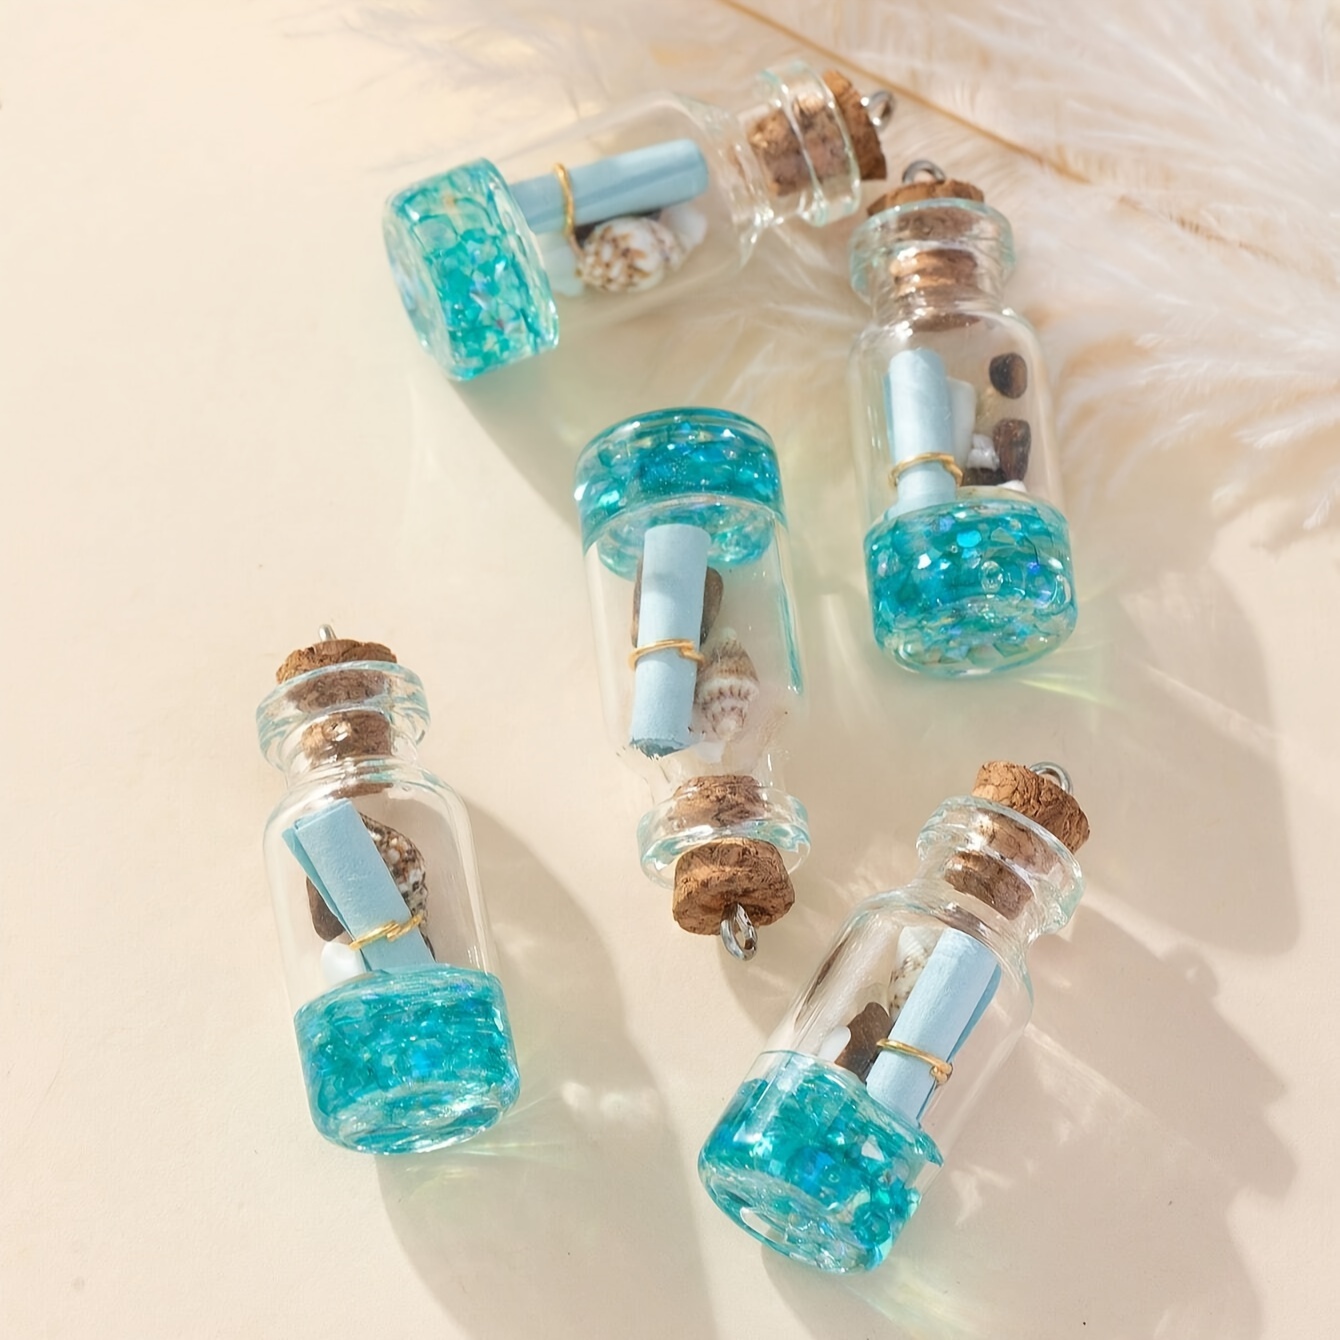 

6pcs Drift Glass Bottle Charms Wish Bottle Pendants For Diy Jewelry Making Handmade Necklace Earrings Key Chain Accessories